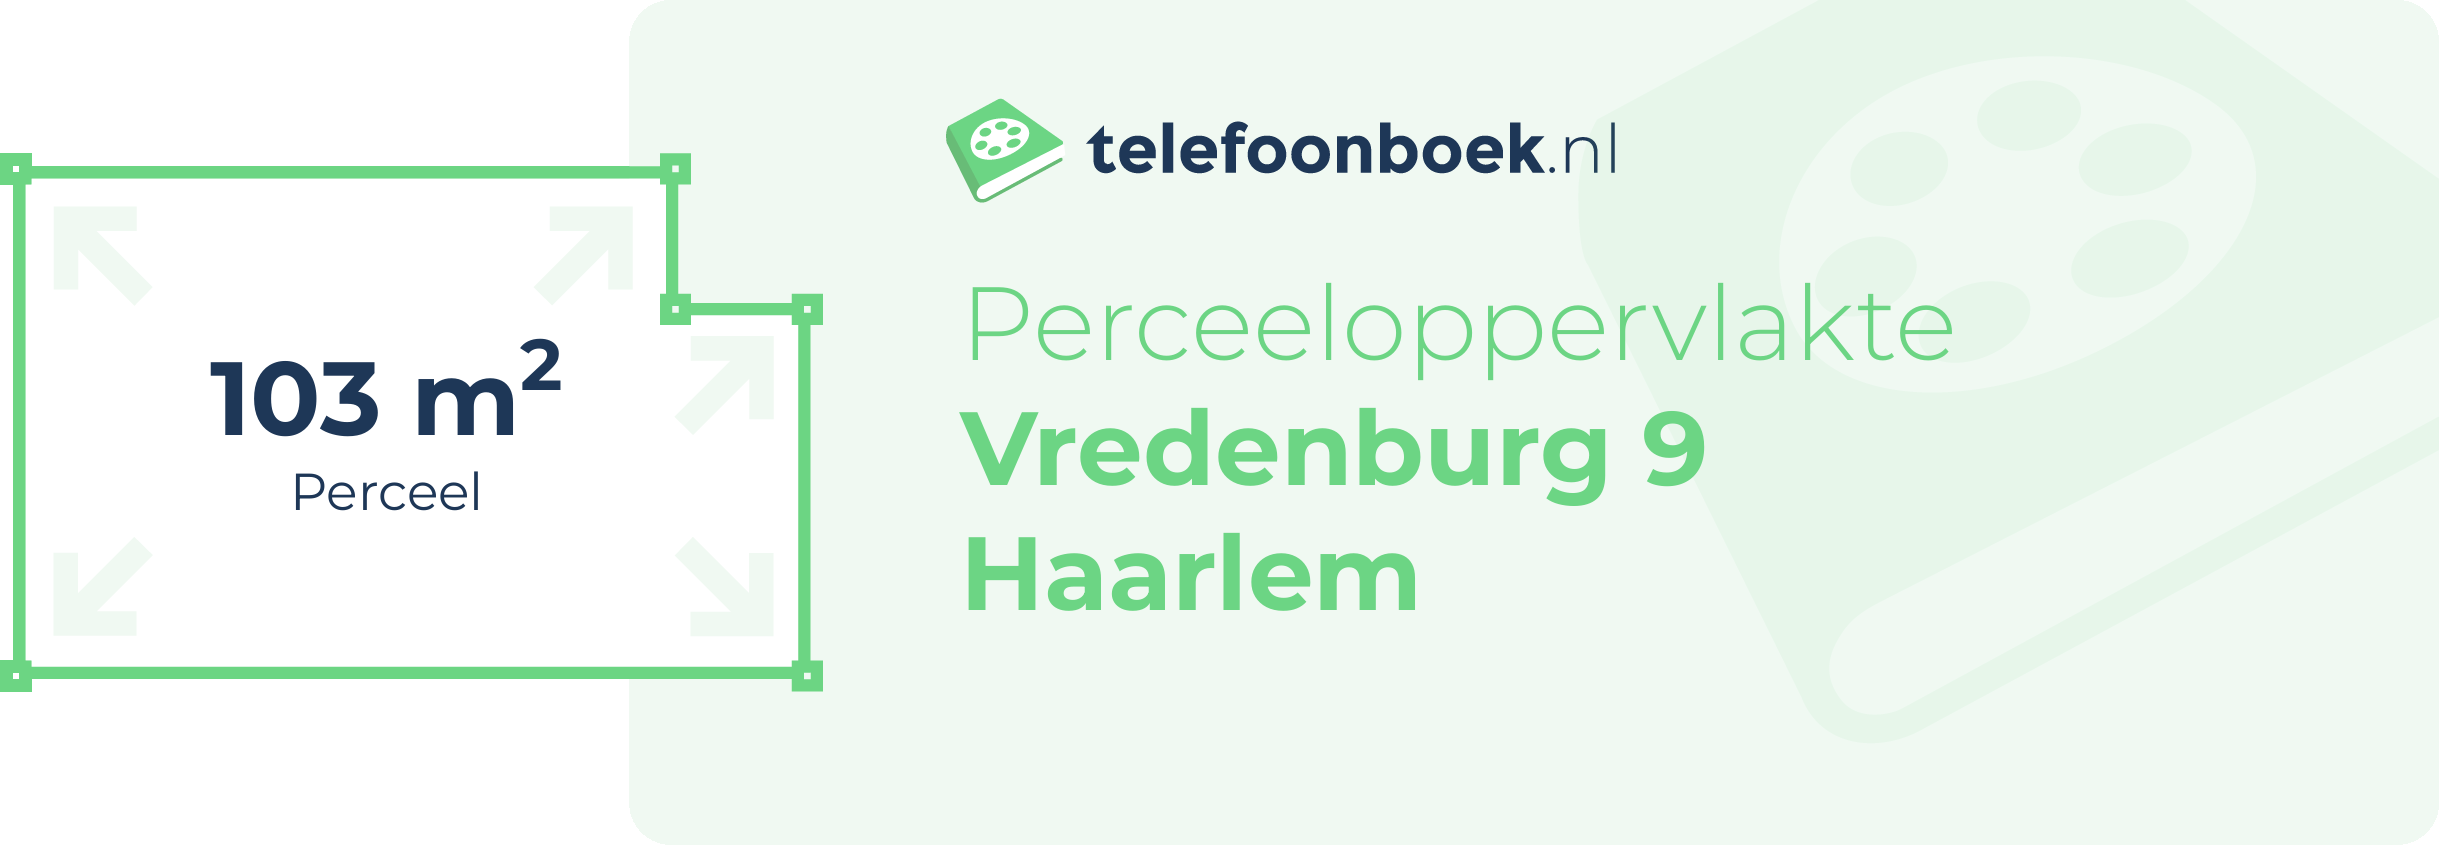 Perceeloppervlakte Vredenburg 9 Haarlem